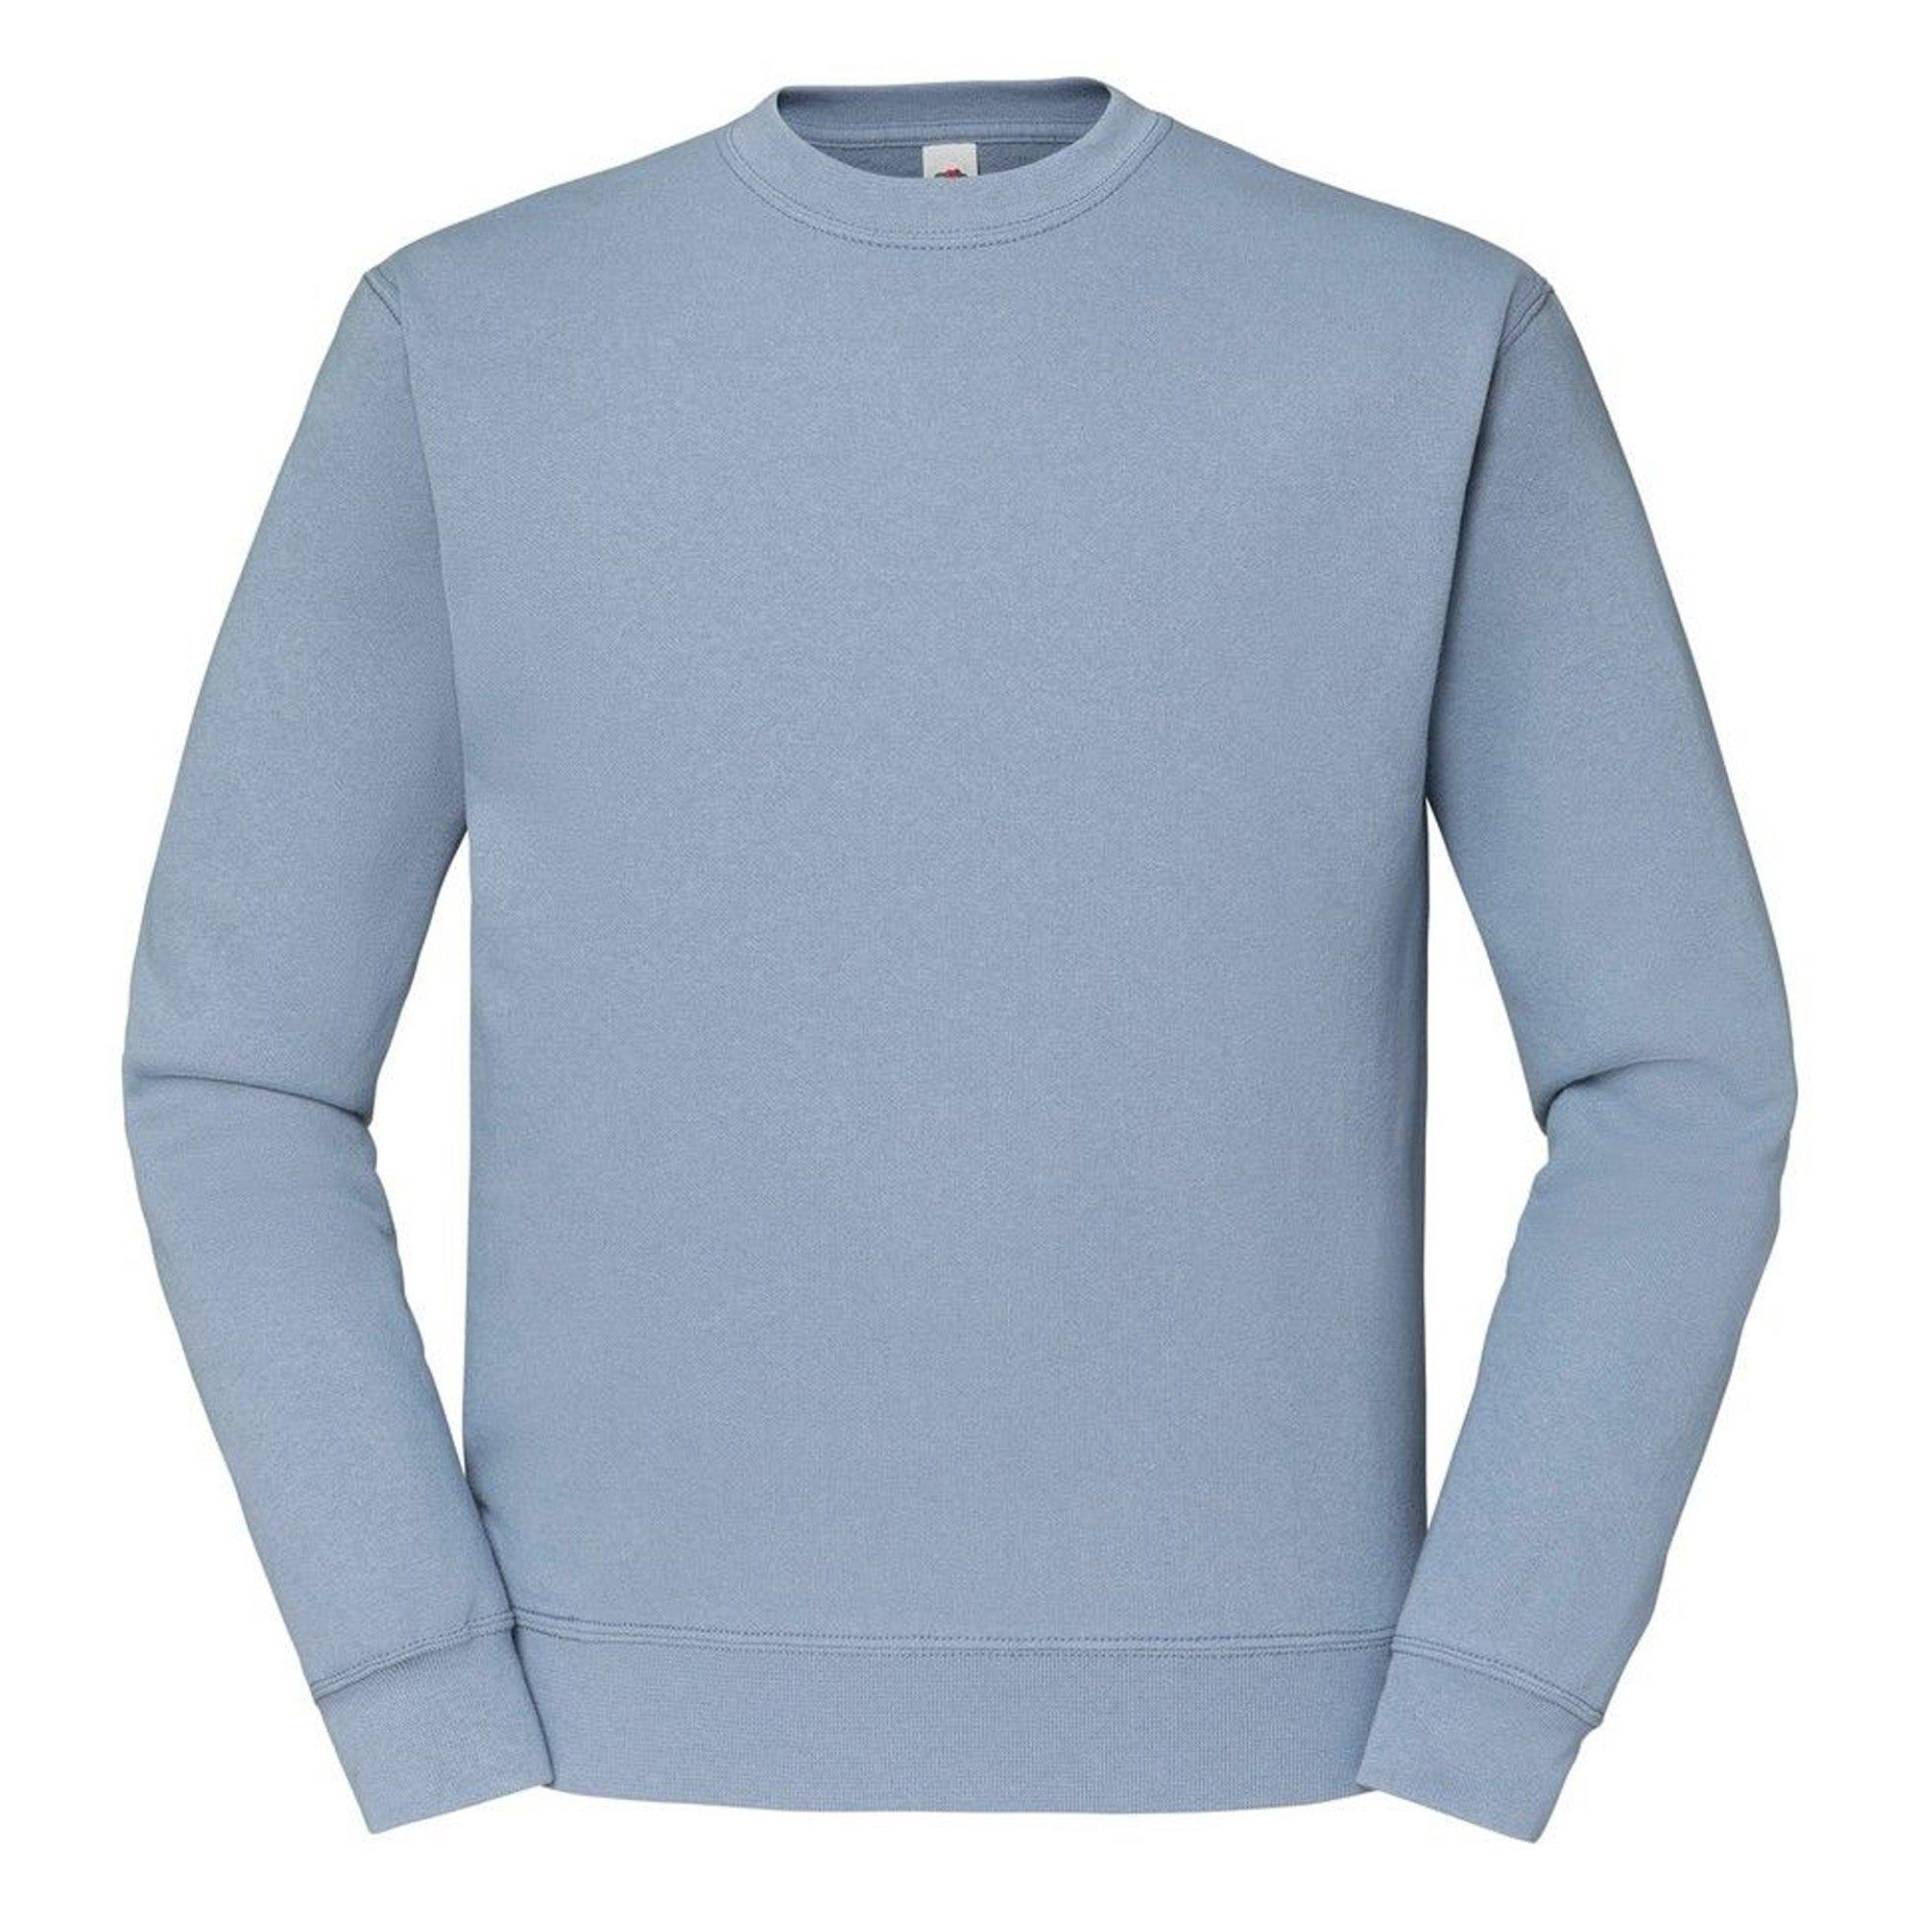 Classic 8020 Sweatshirt Herren Blau M von Fruit of the Loom